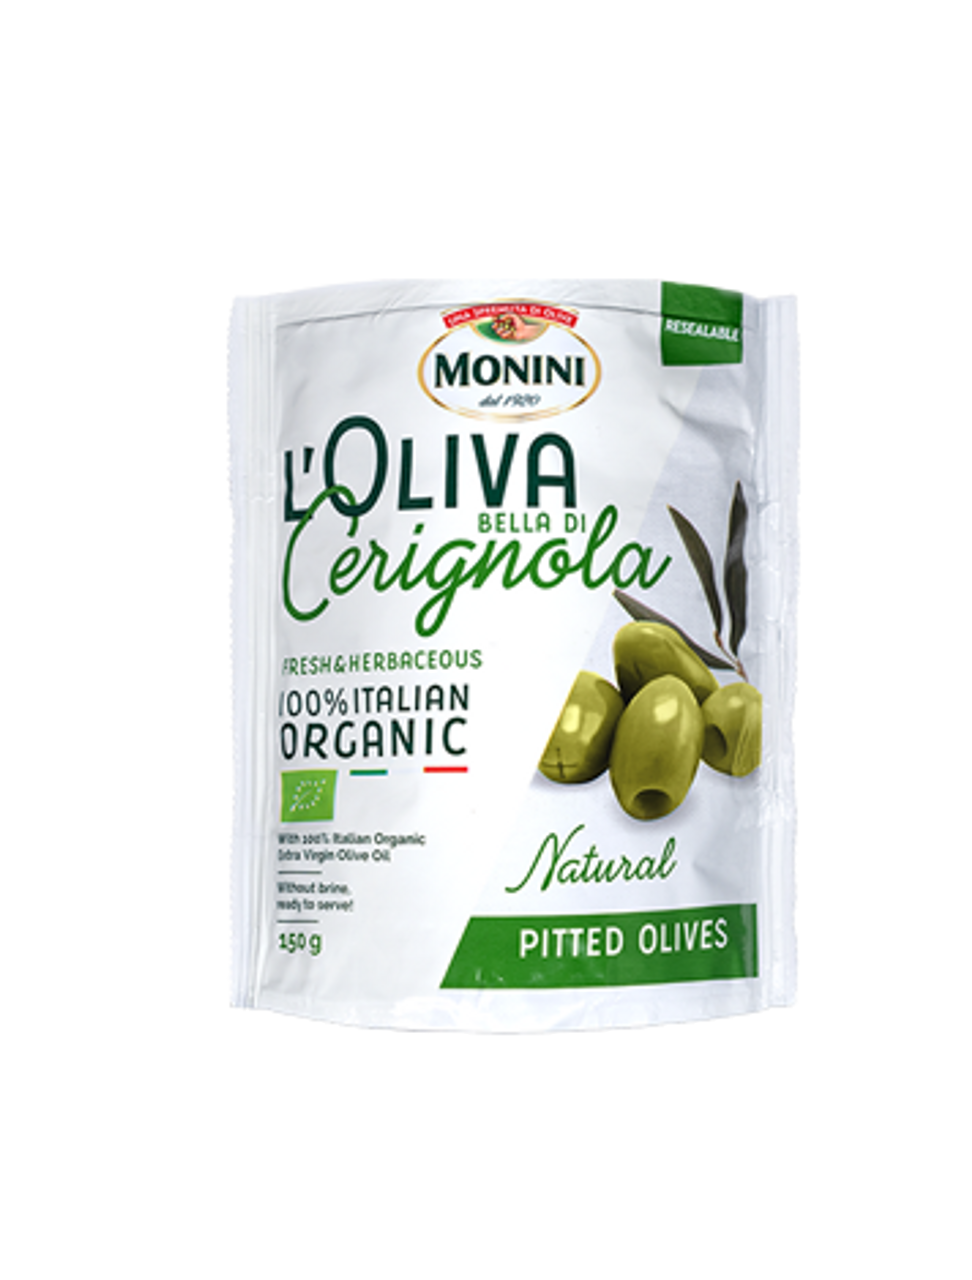 Green 100% BELLA Pitted Italian Olives) L\'OLIVA di ORGANIC CERIGNOLA (Natural